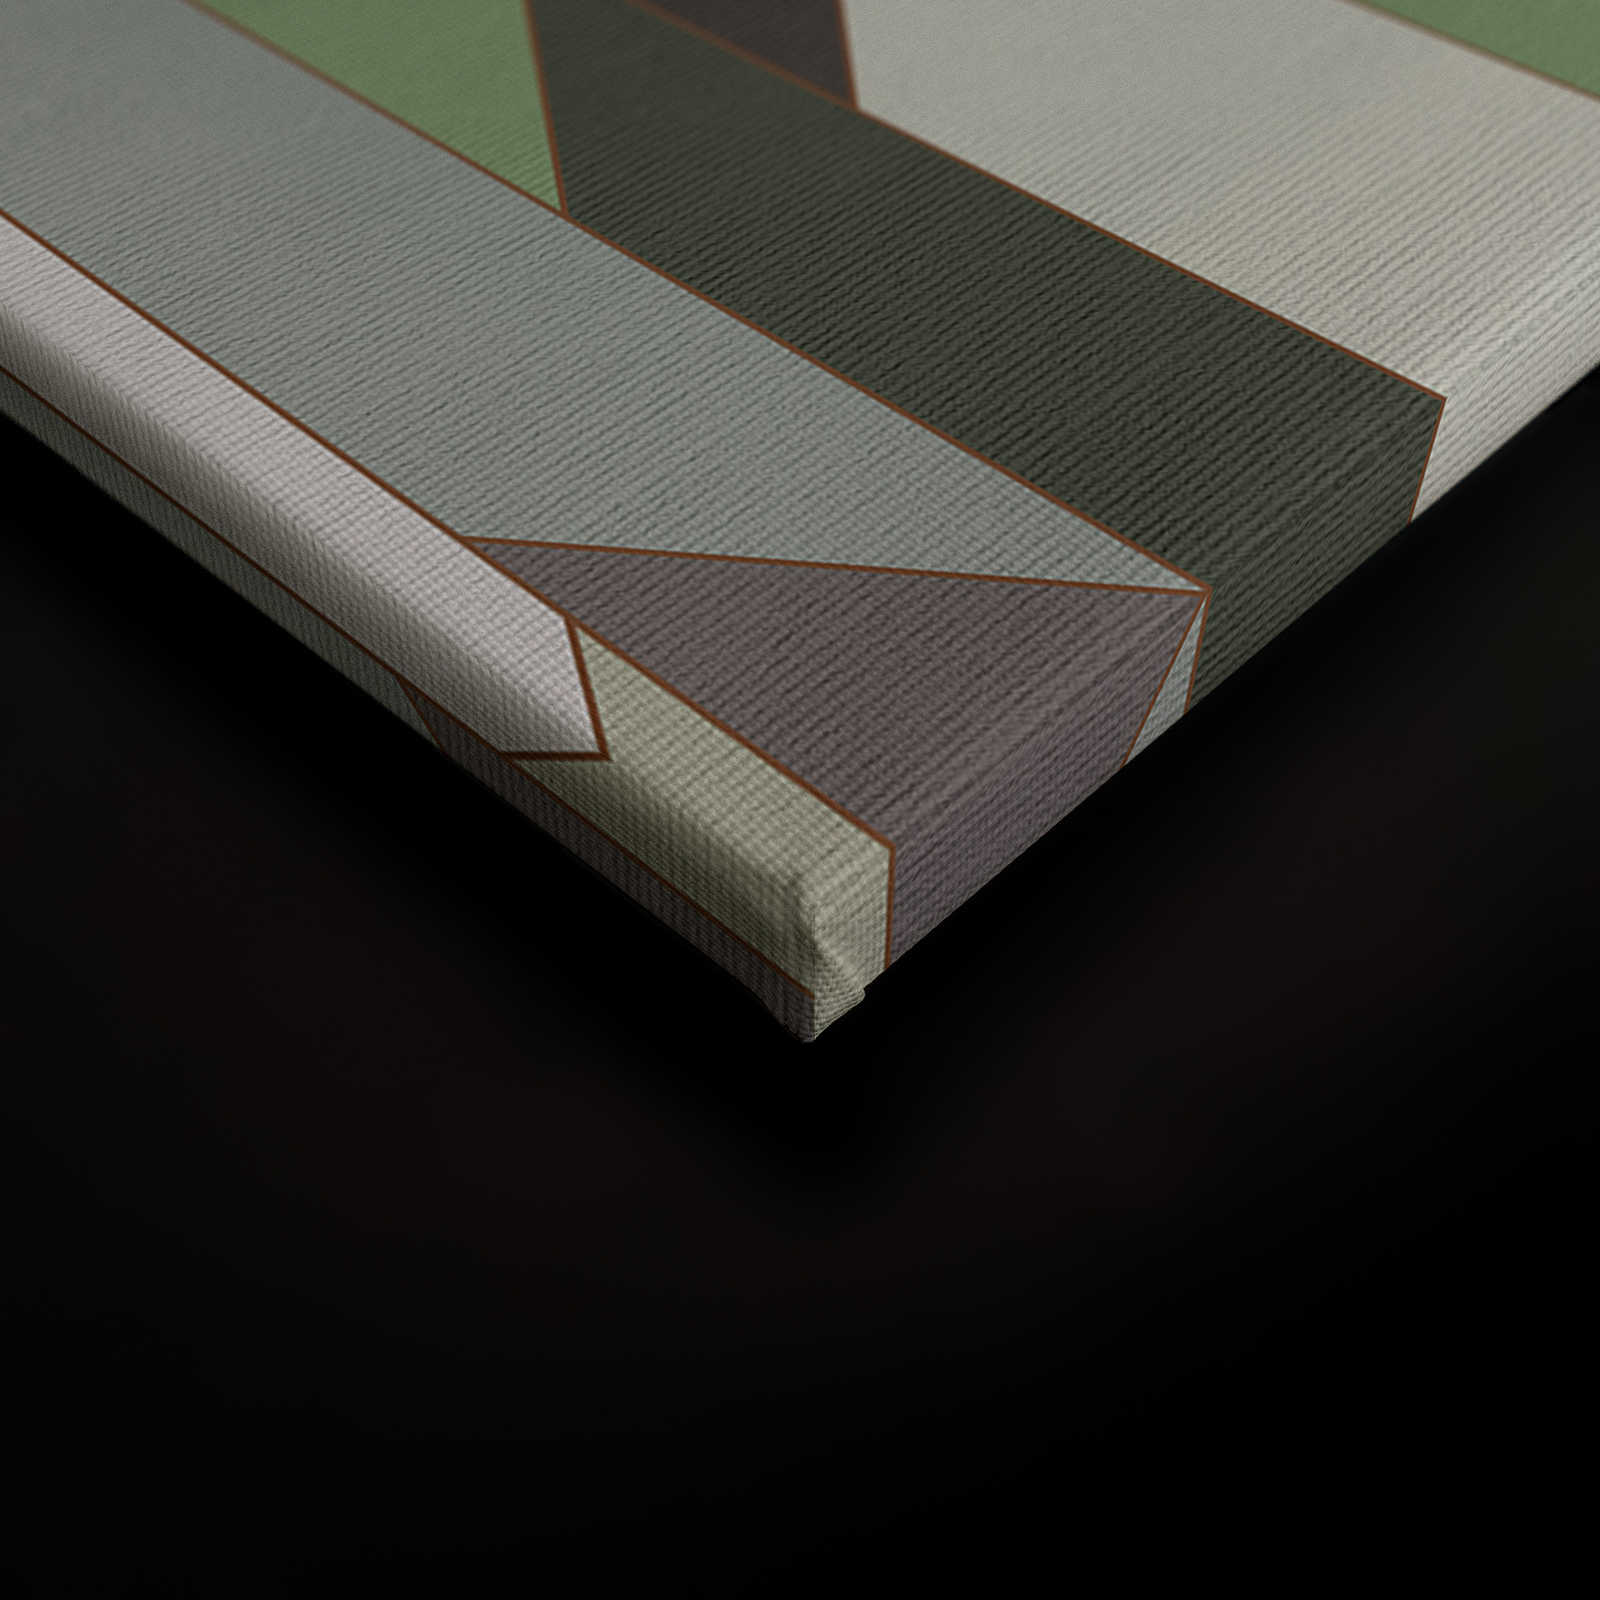             Fold 1 - Leinwandbild mit Streifendesign im Retro Stil – 1,20 m x 0,80 m
        